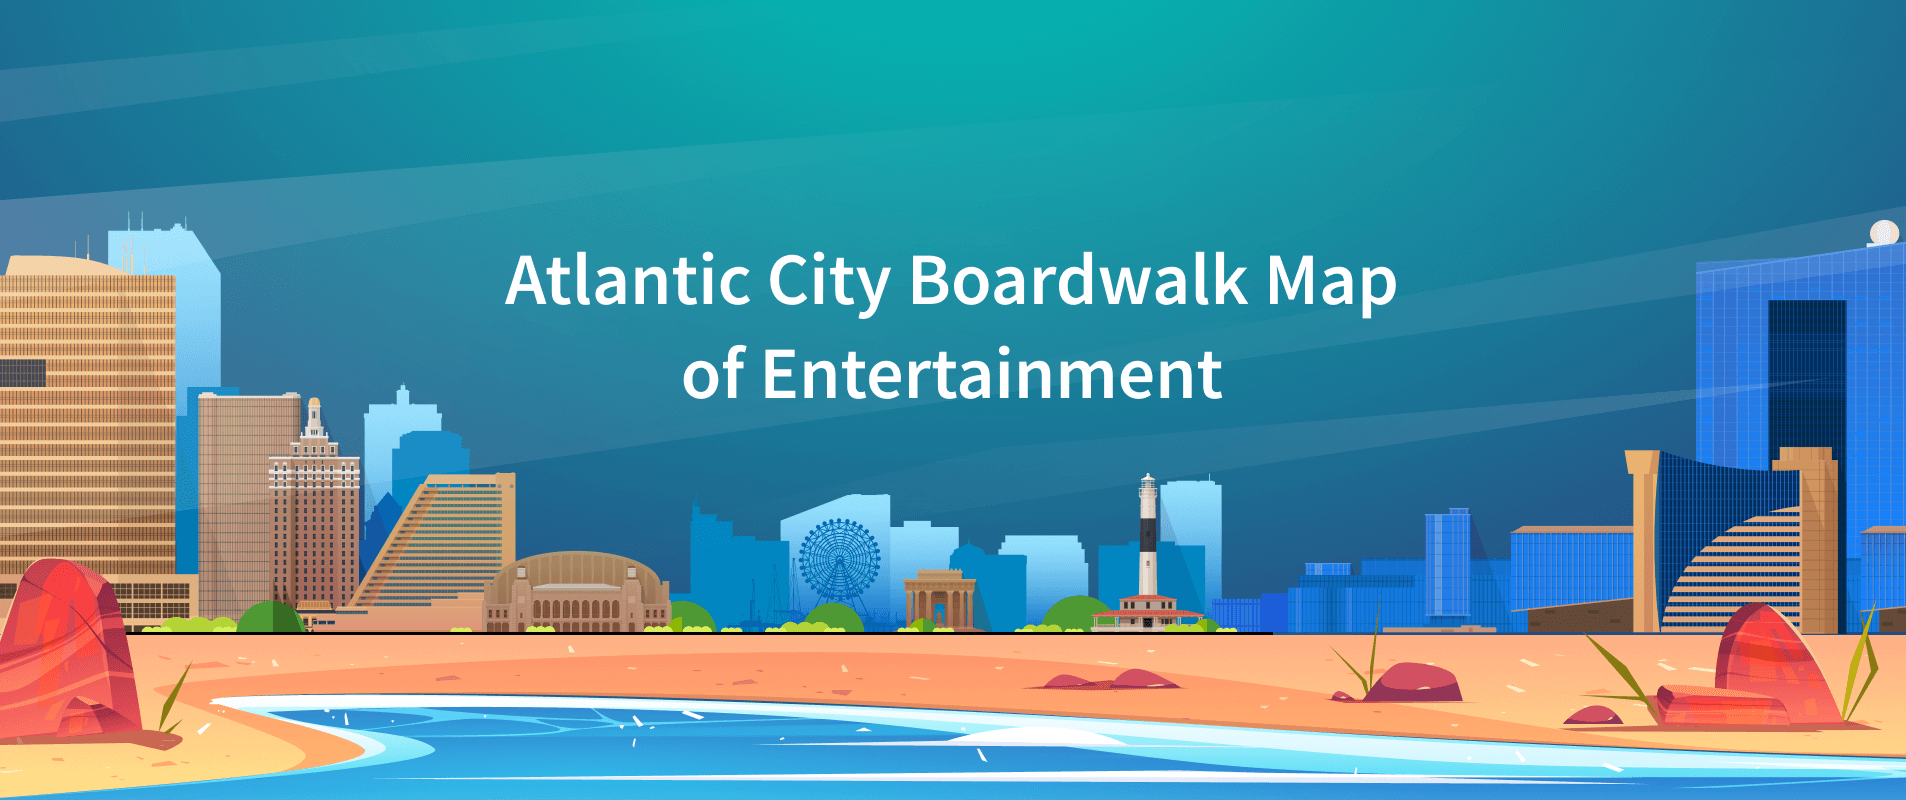 Ac Boardwalk Entertainment Map 